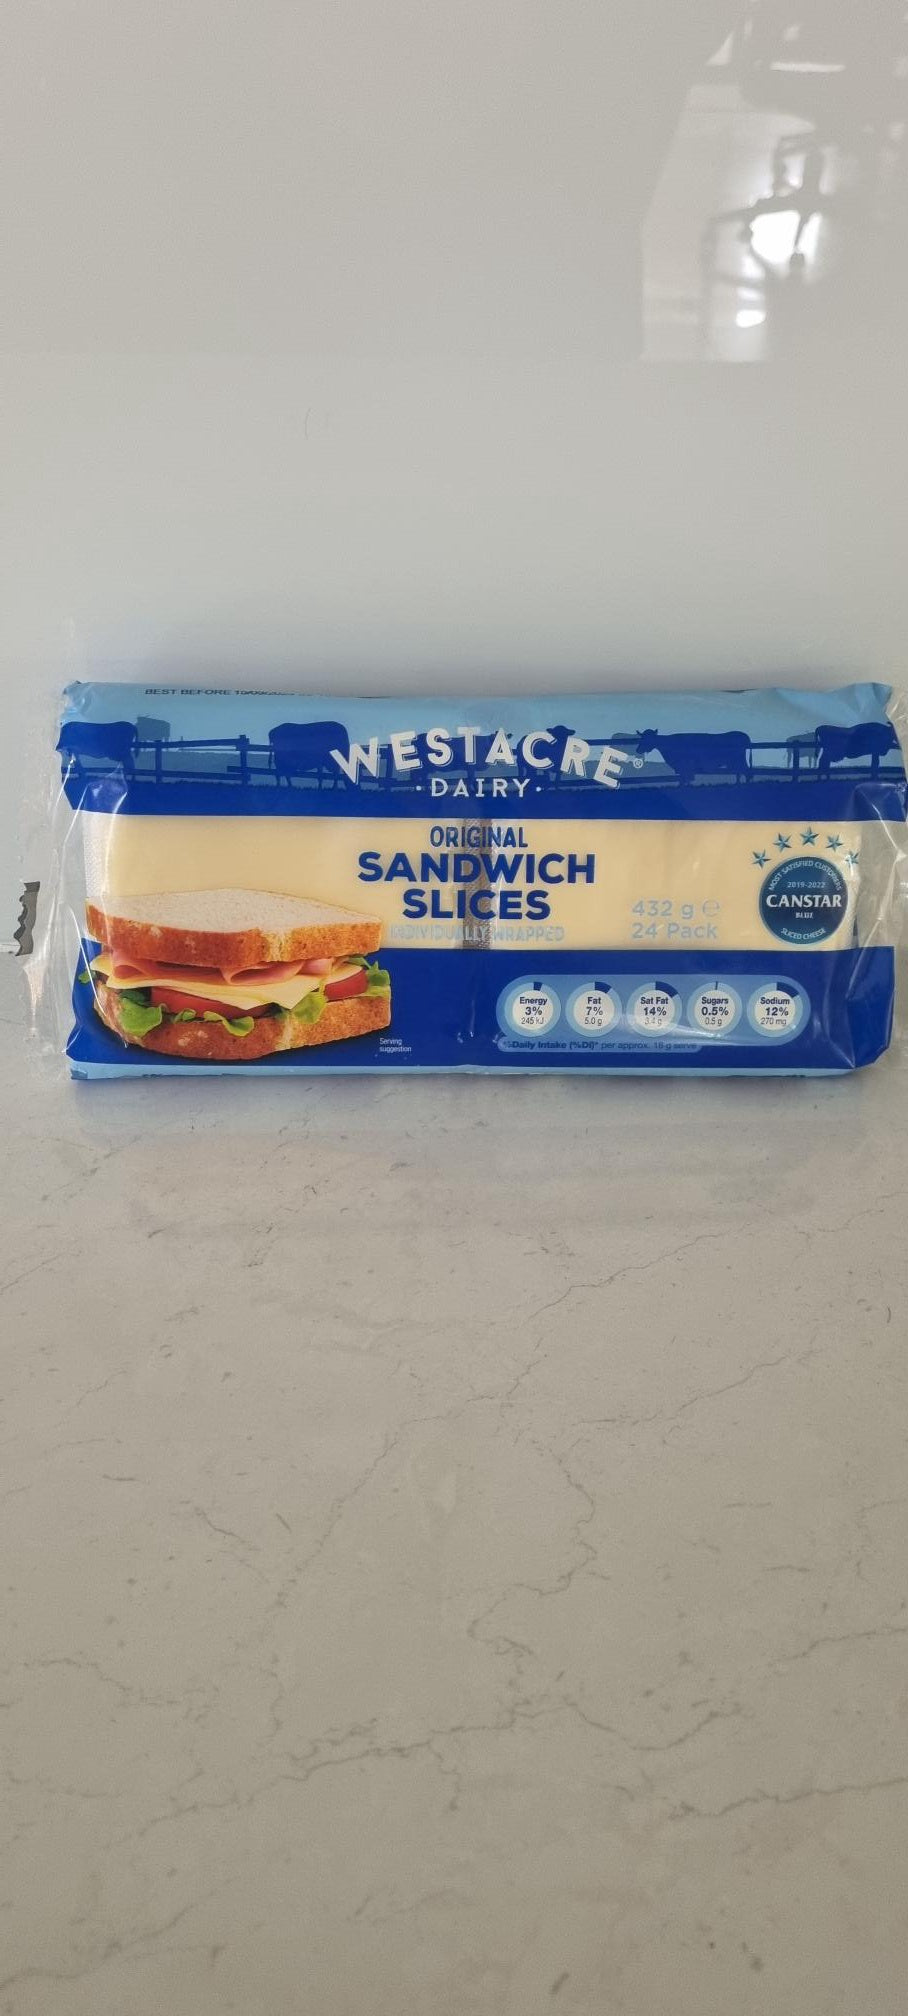 Westacre Original Sandwich Slices 432g